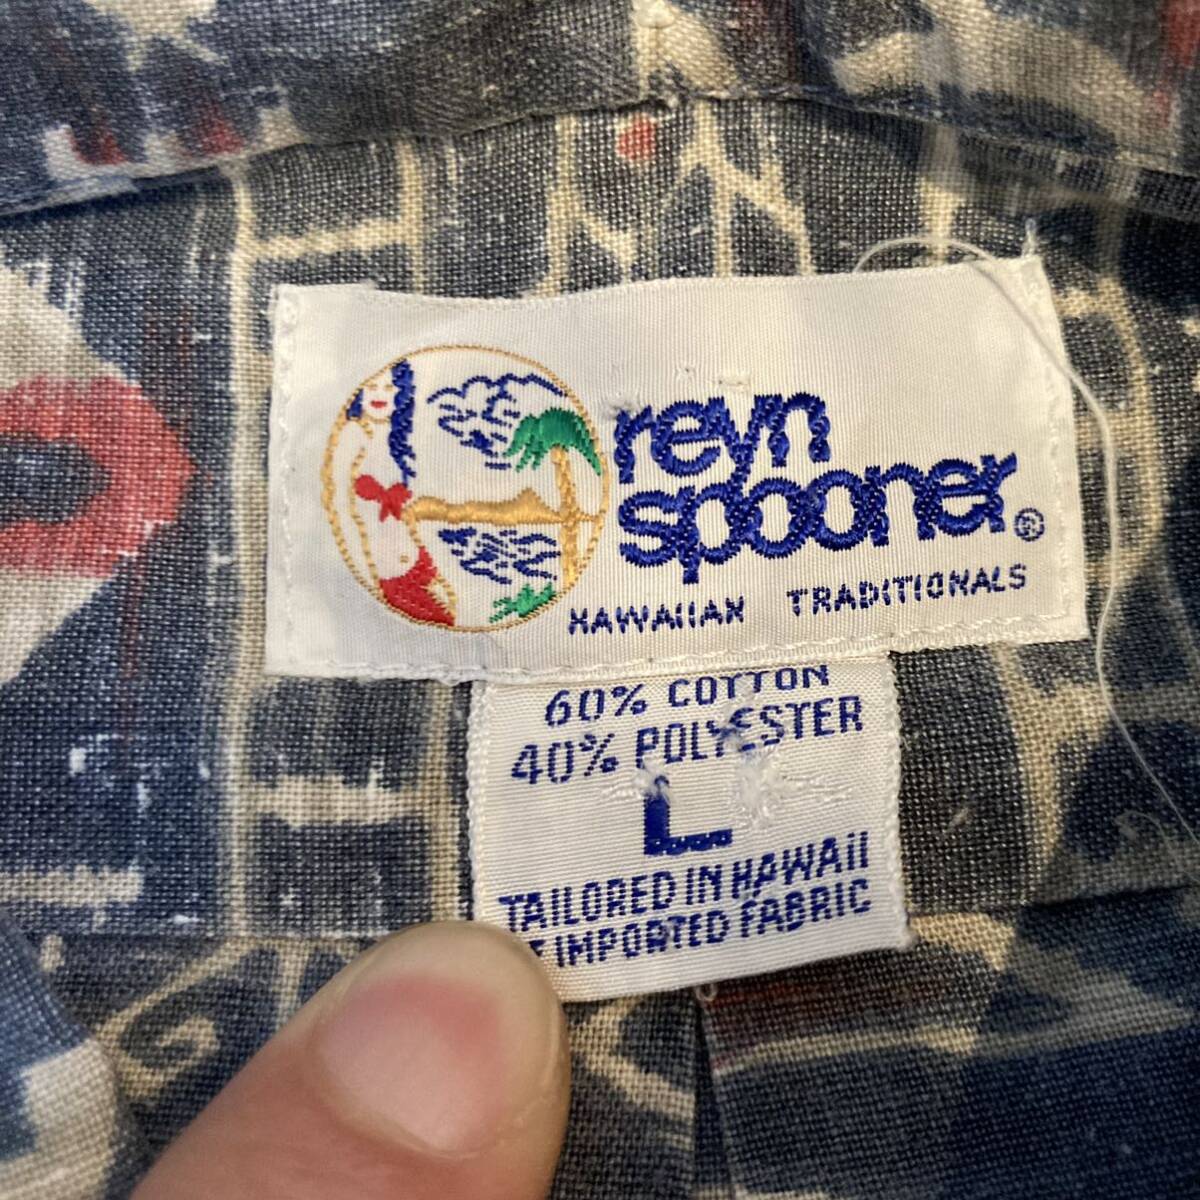 reyn spooner 半袖シャツ 中古 サイズL レインスプーナー 90s アロハシャツ vintage_画像3